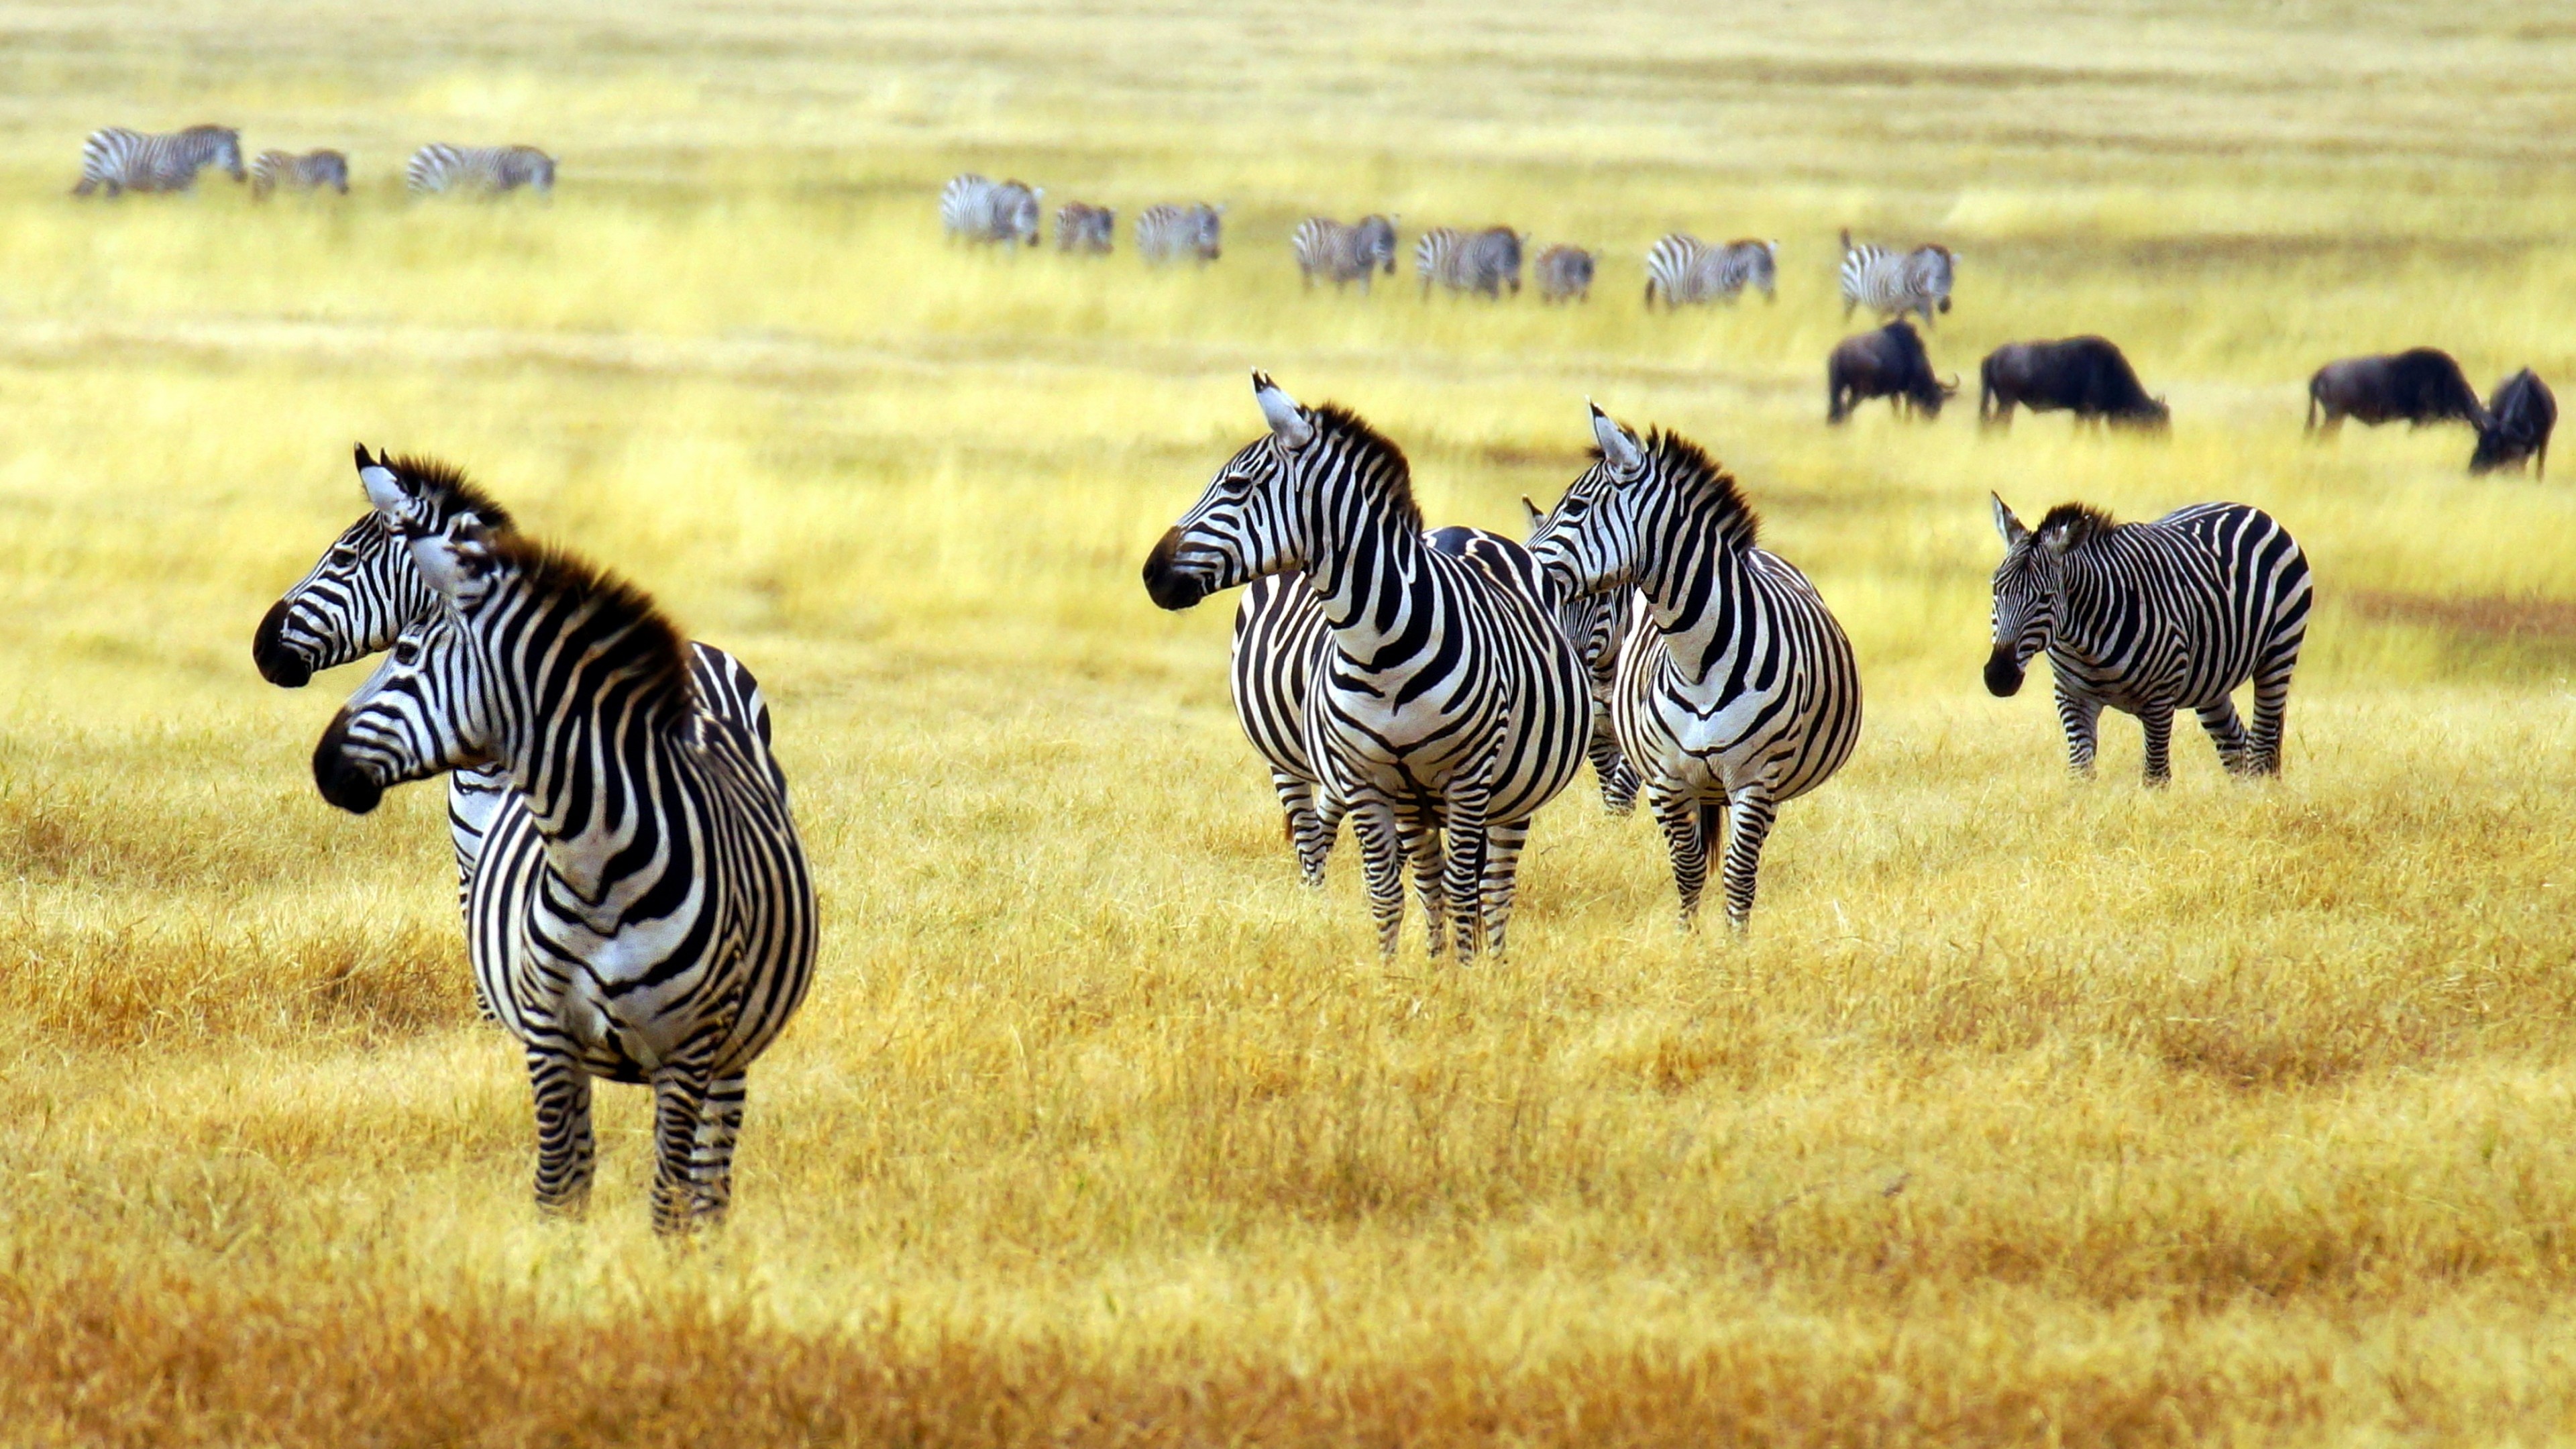 Zebra in savanna wallpaper, Cute animal imagery, Stunning wildlife visuals, Serene natural landscapes, 3840x2160 4K Desktop